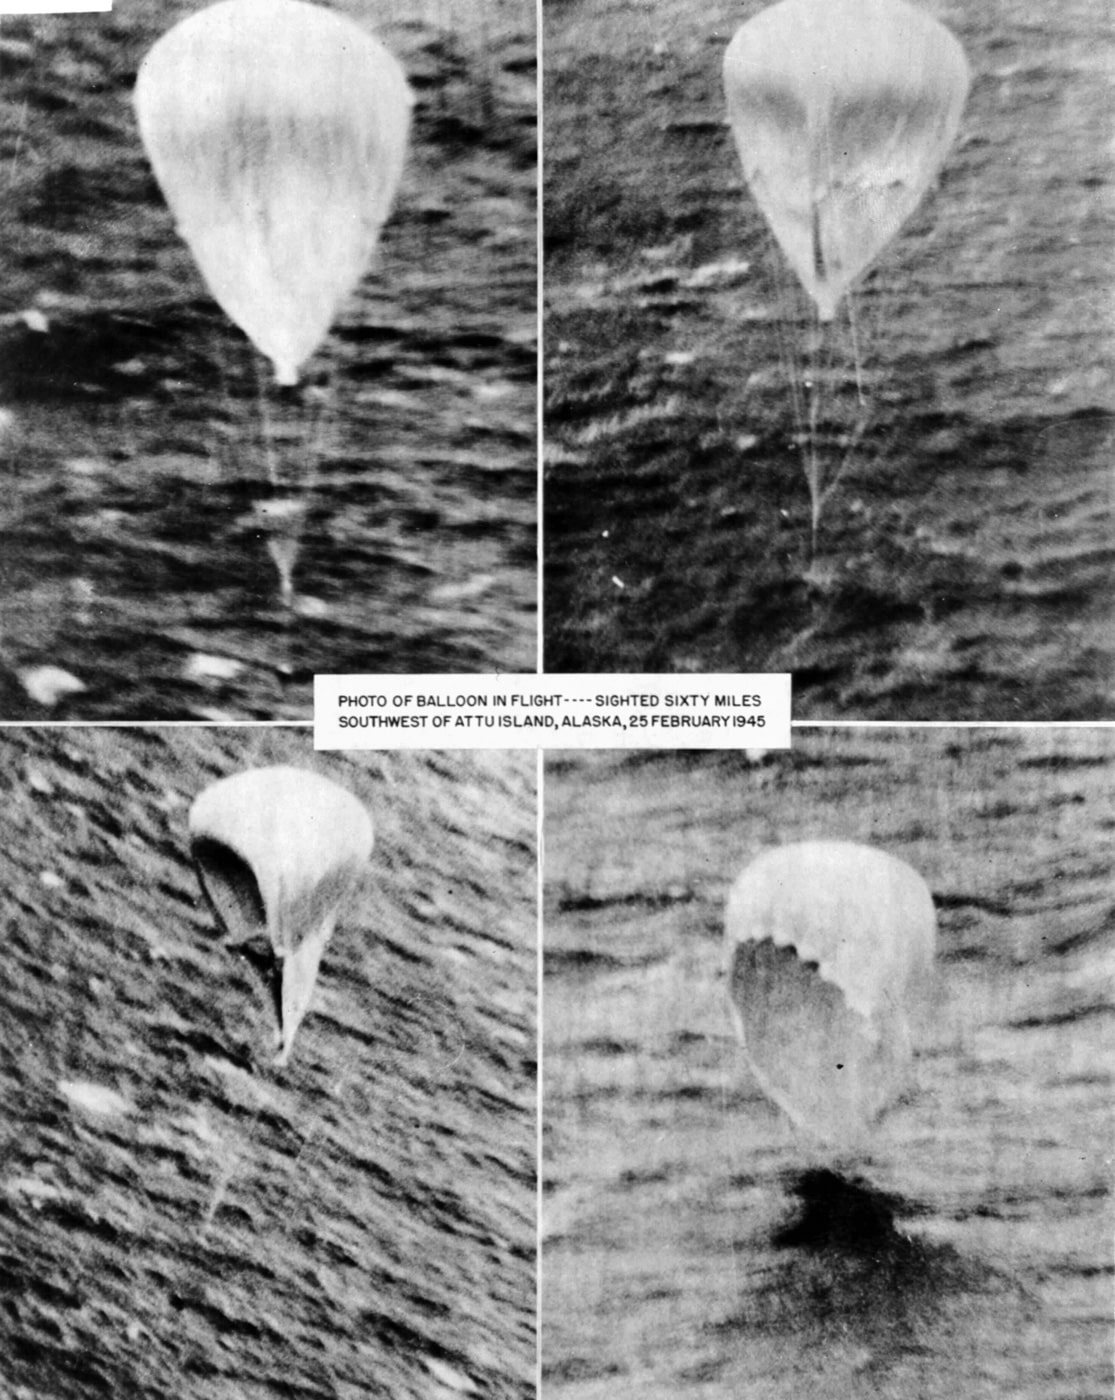 balloon bomb crashes into sea